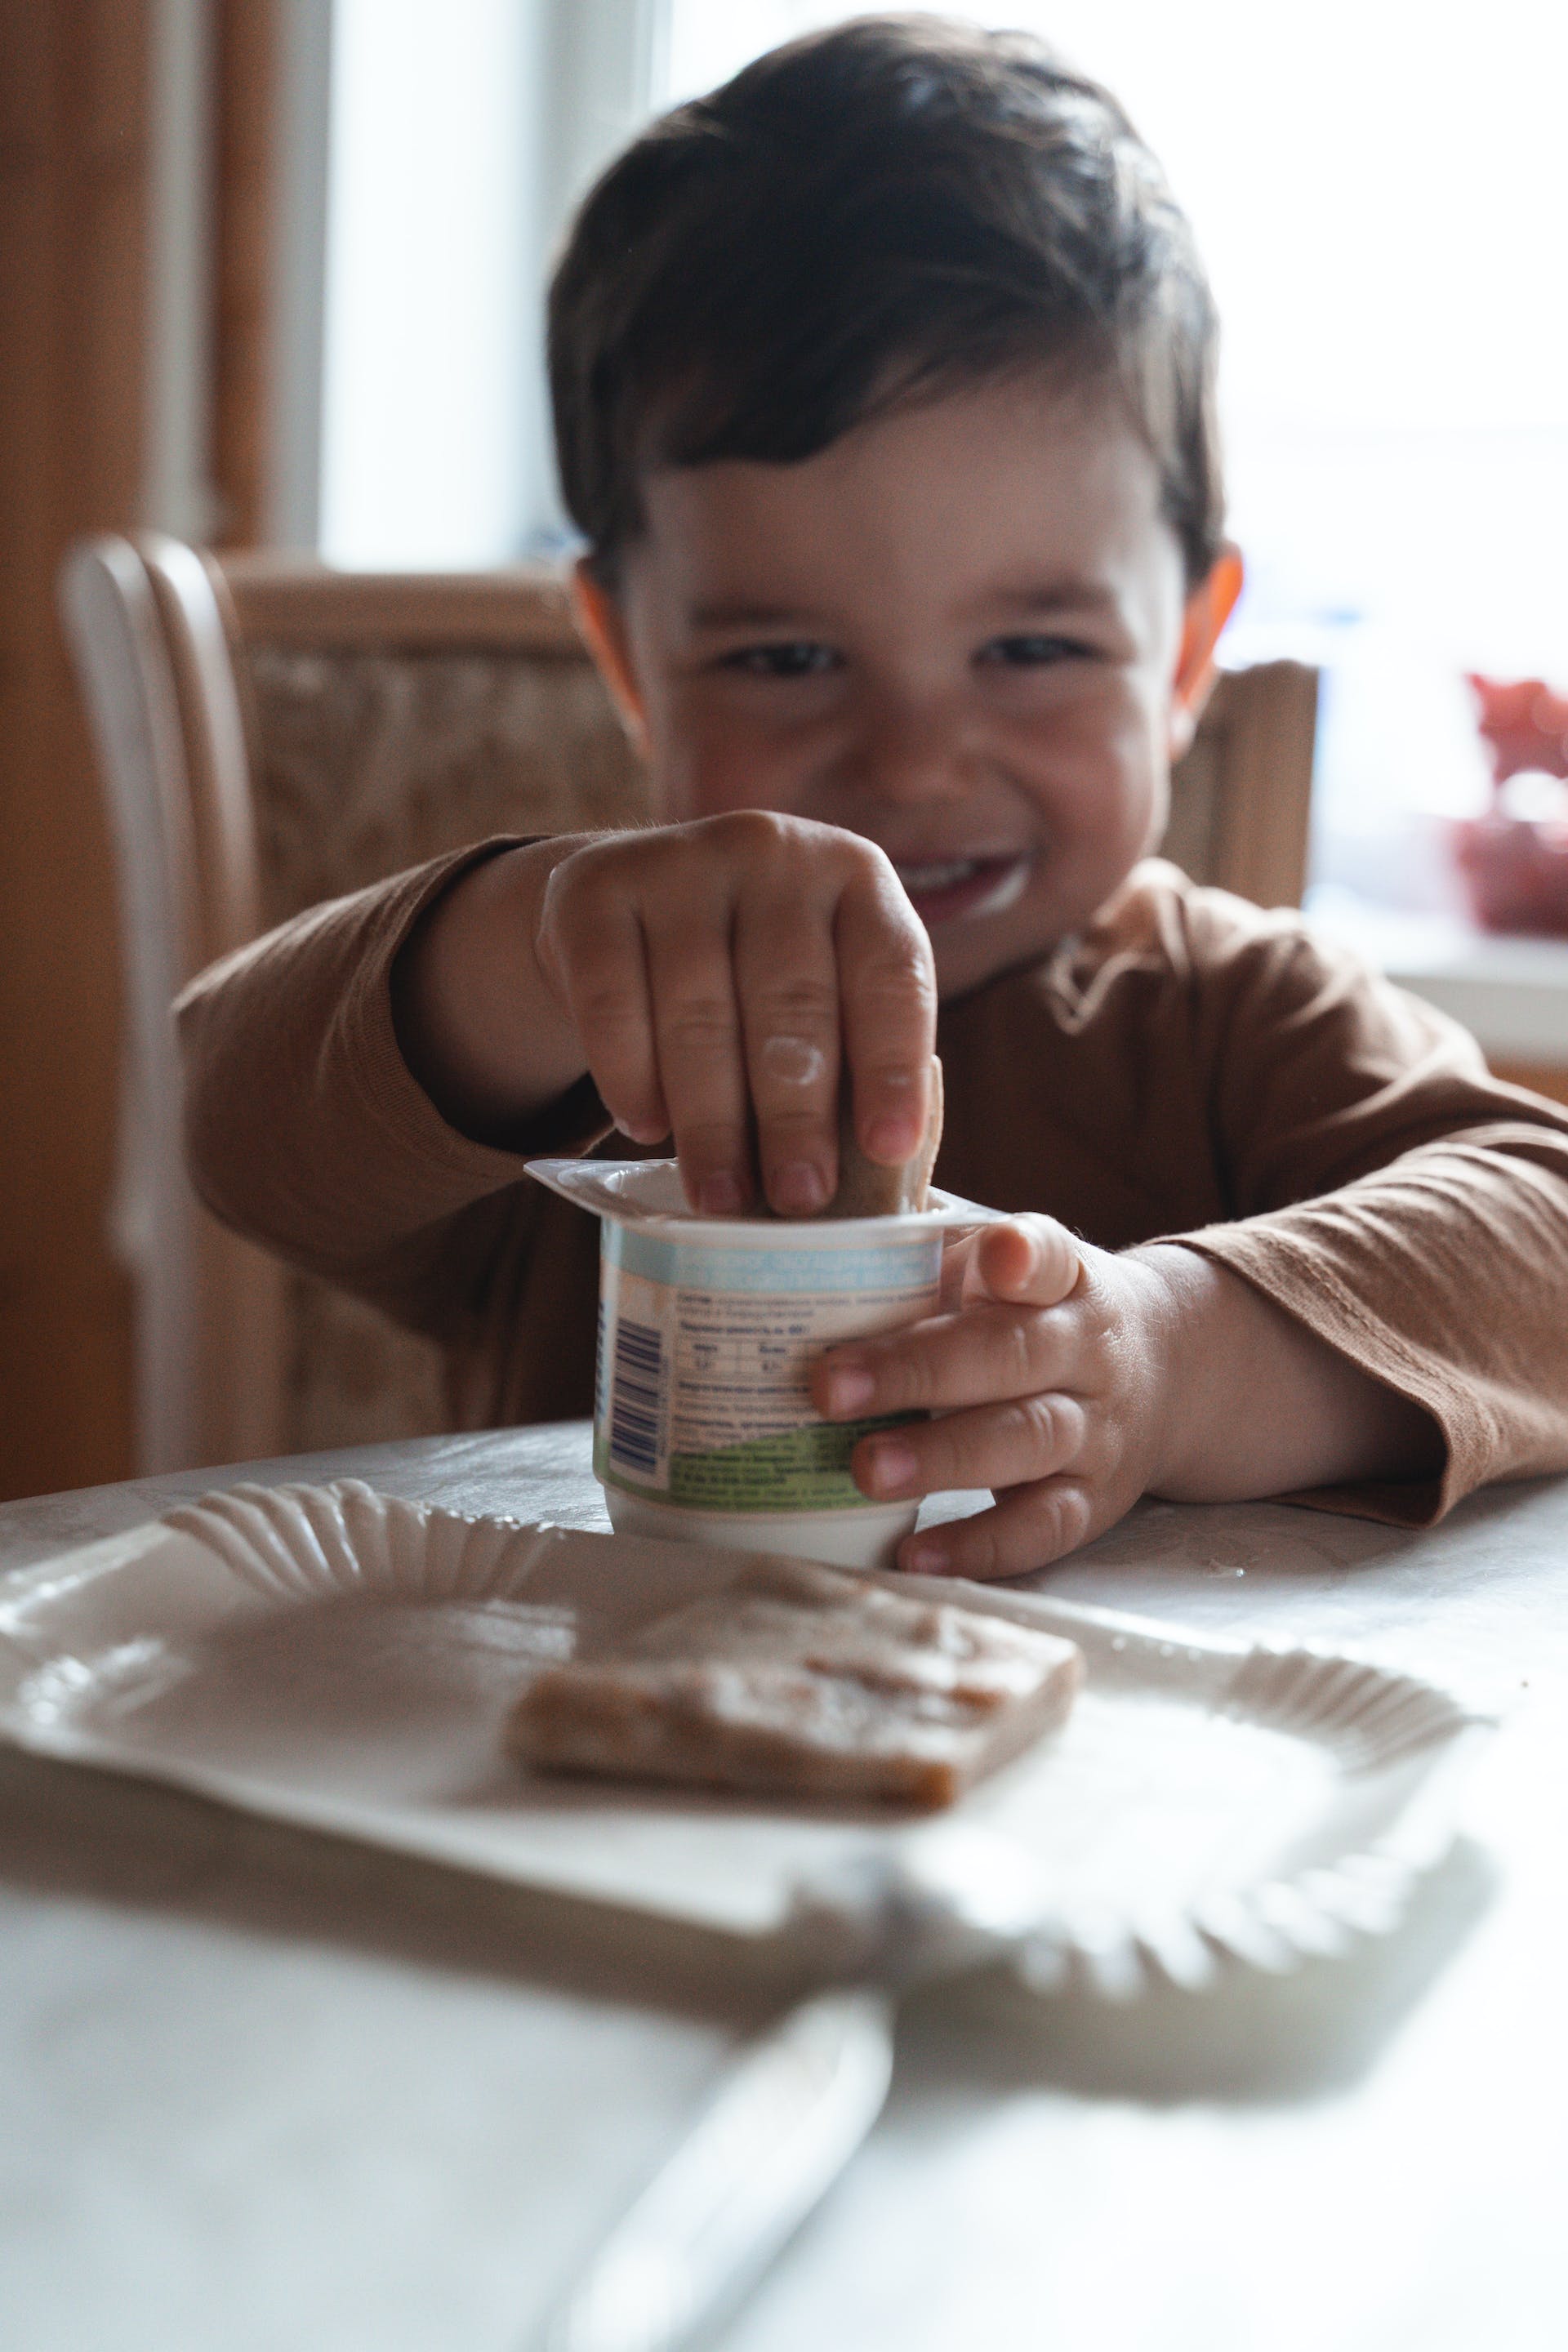 Kleiner Junge isst Joghurt | Quelle: Pexels